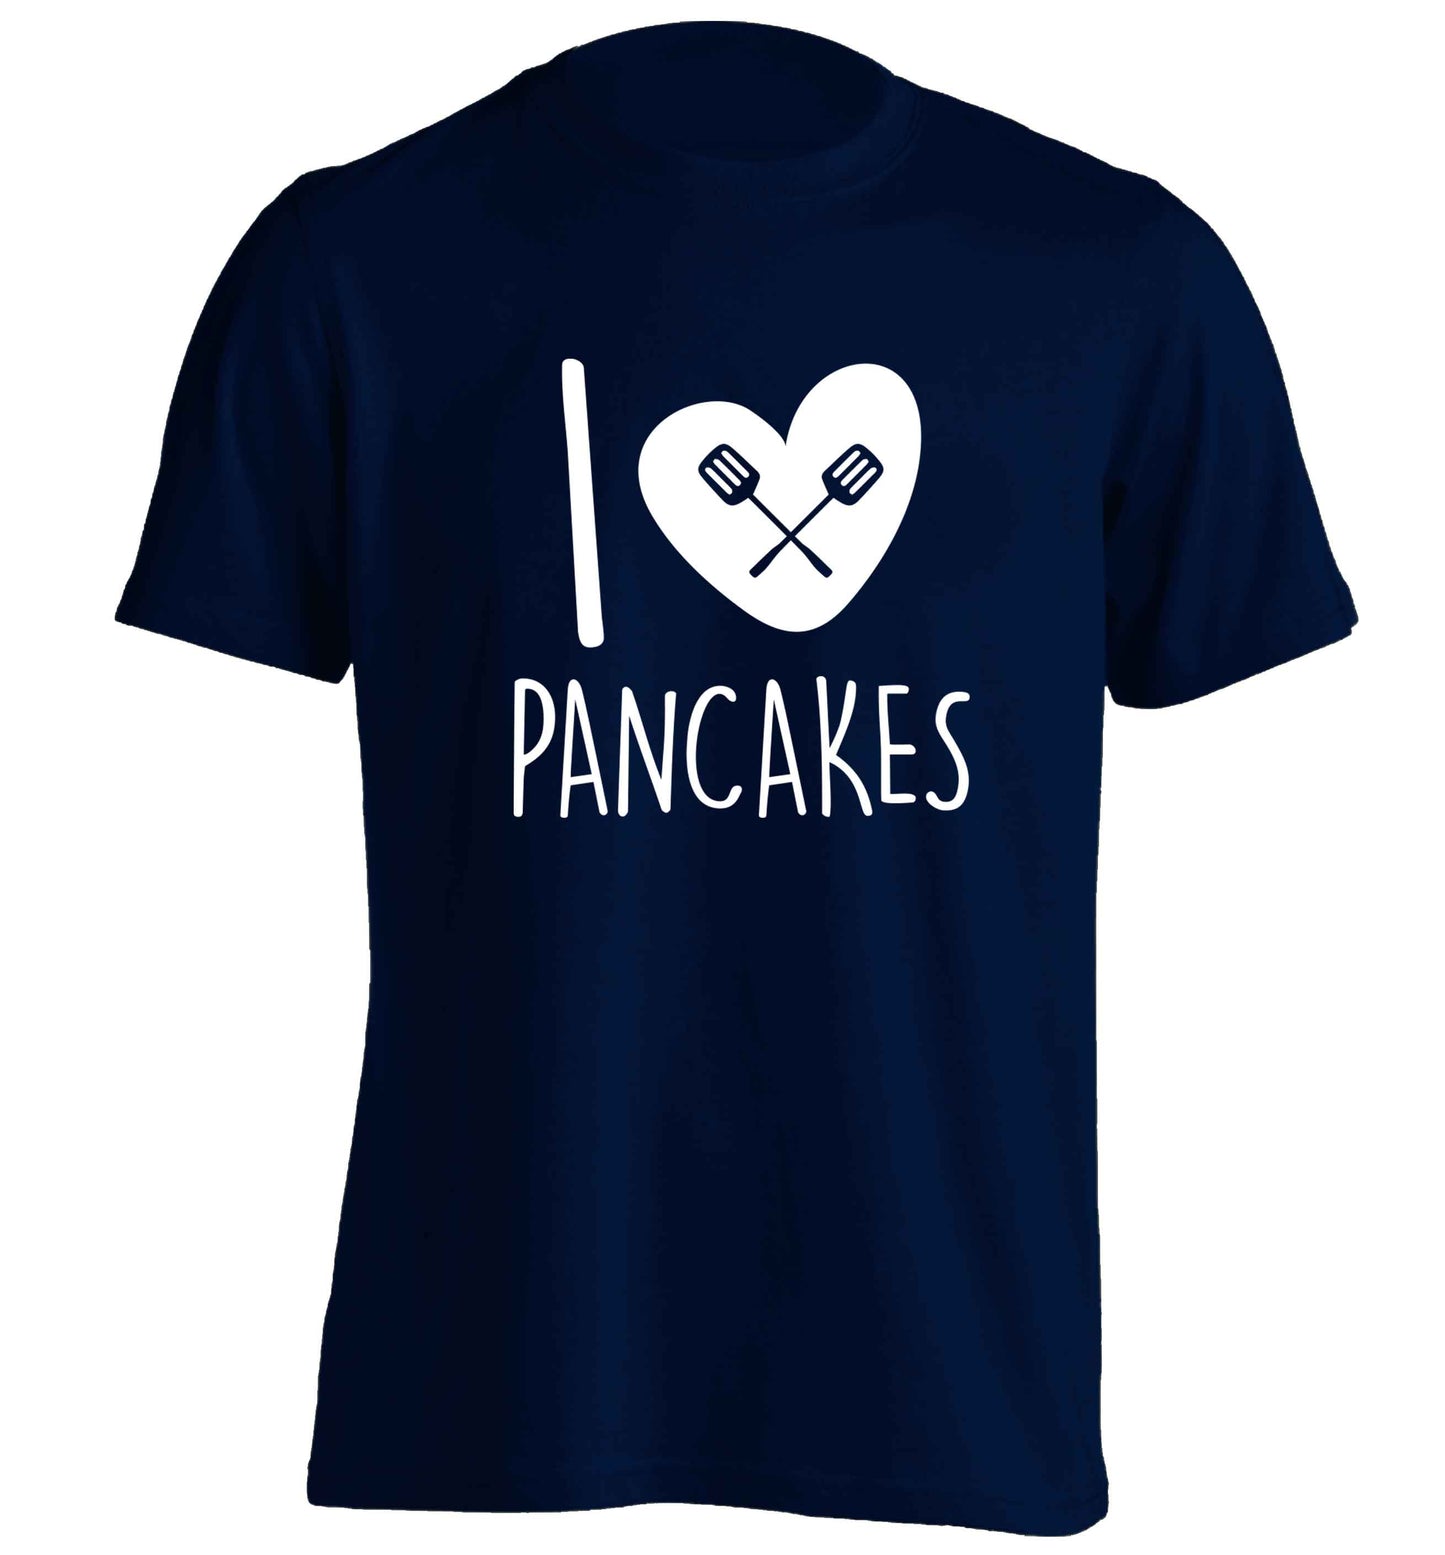 I love pancakes adults unisex navy Tshirt 2XL